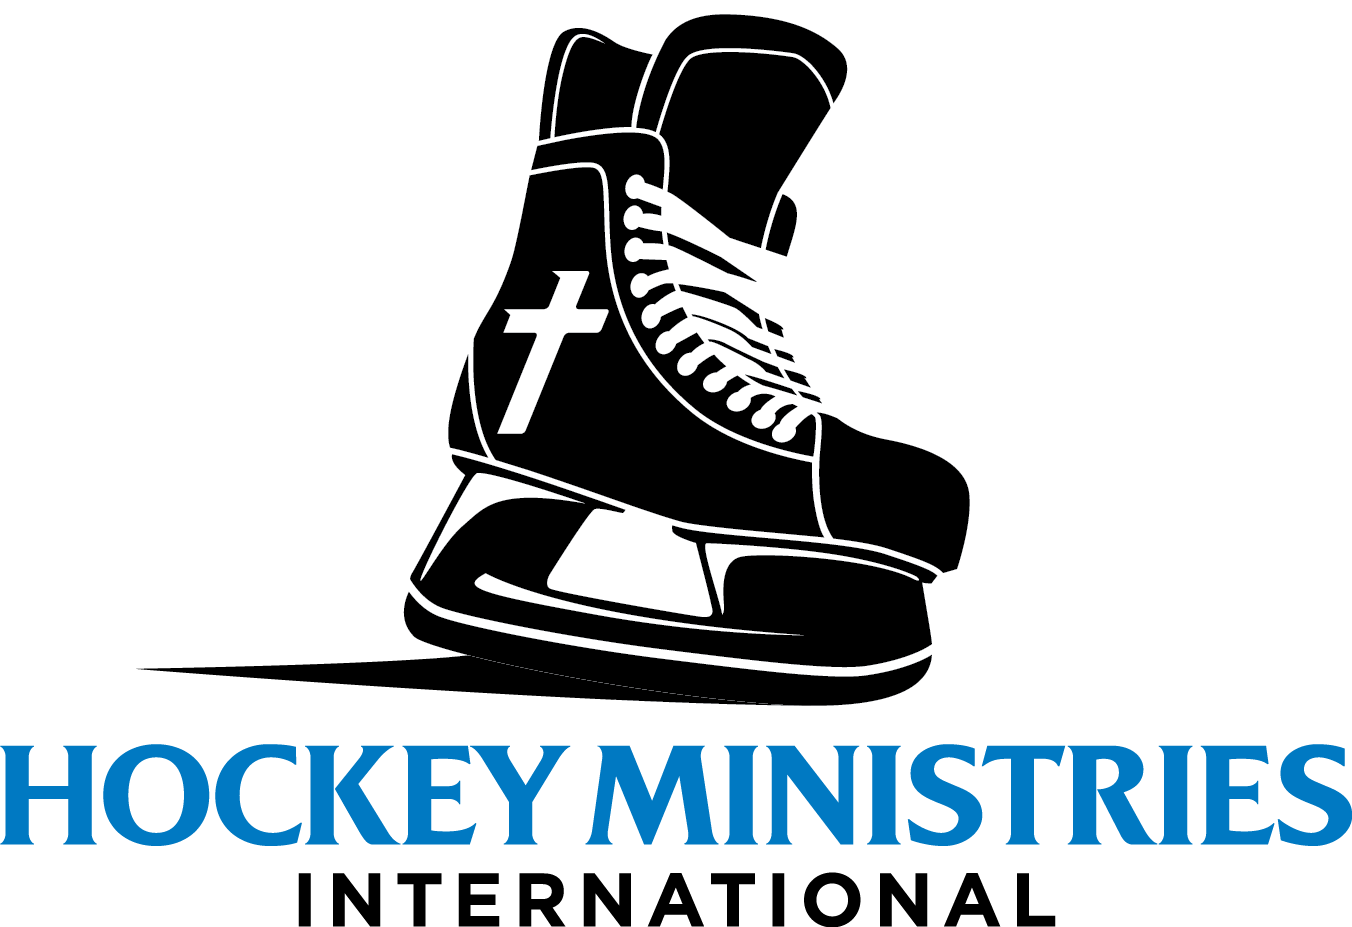 ministry hockey jersey